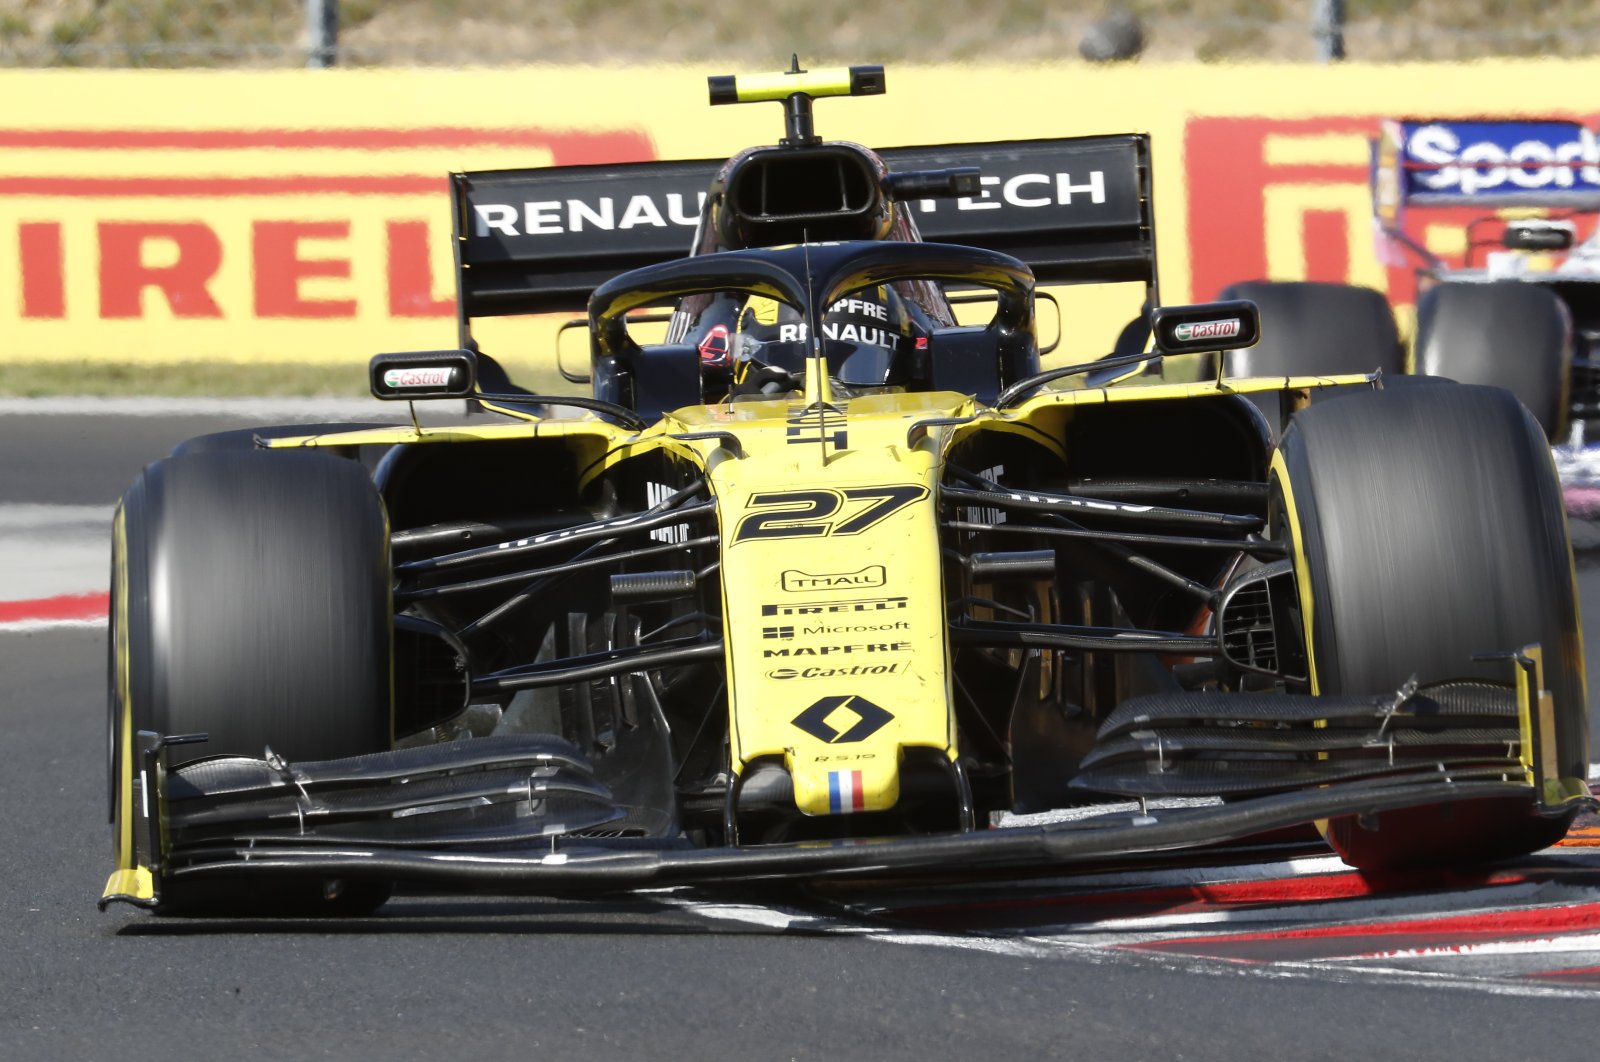 Renault driver Nico Hulkenberg during the Hungarian GP near Budapest, Hungary, Aug. 4, 2019. (AP Photo)